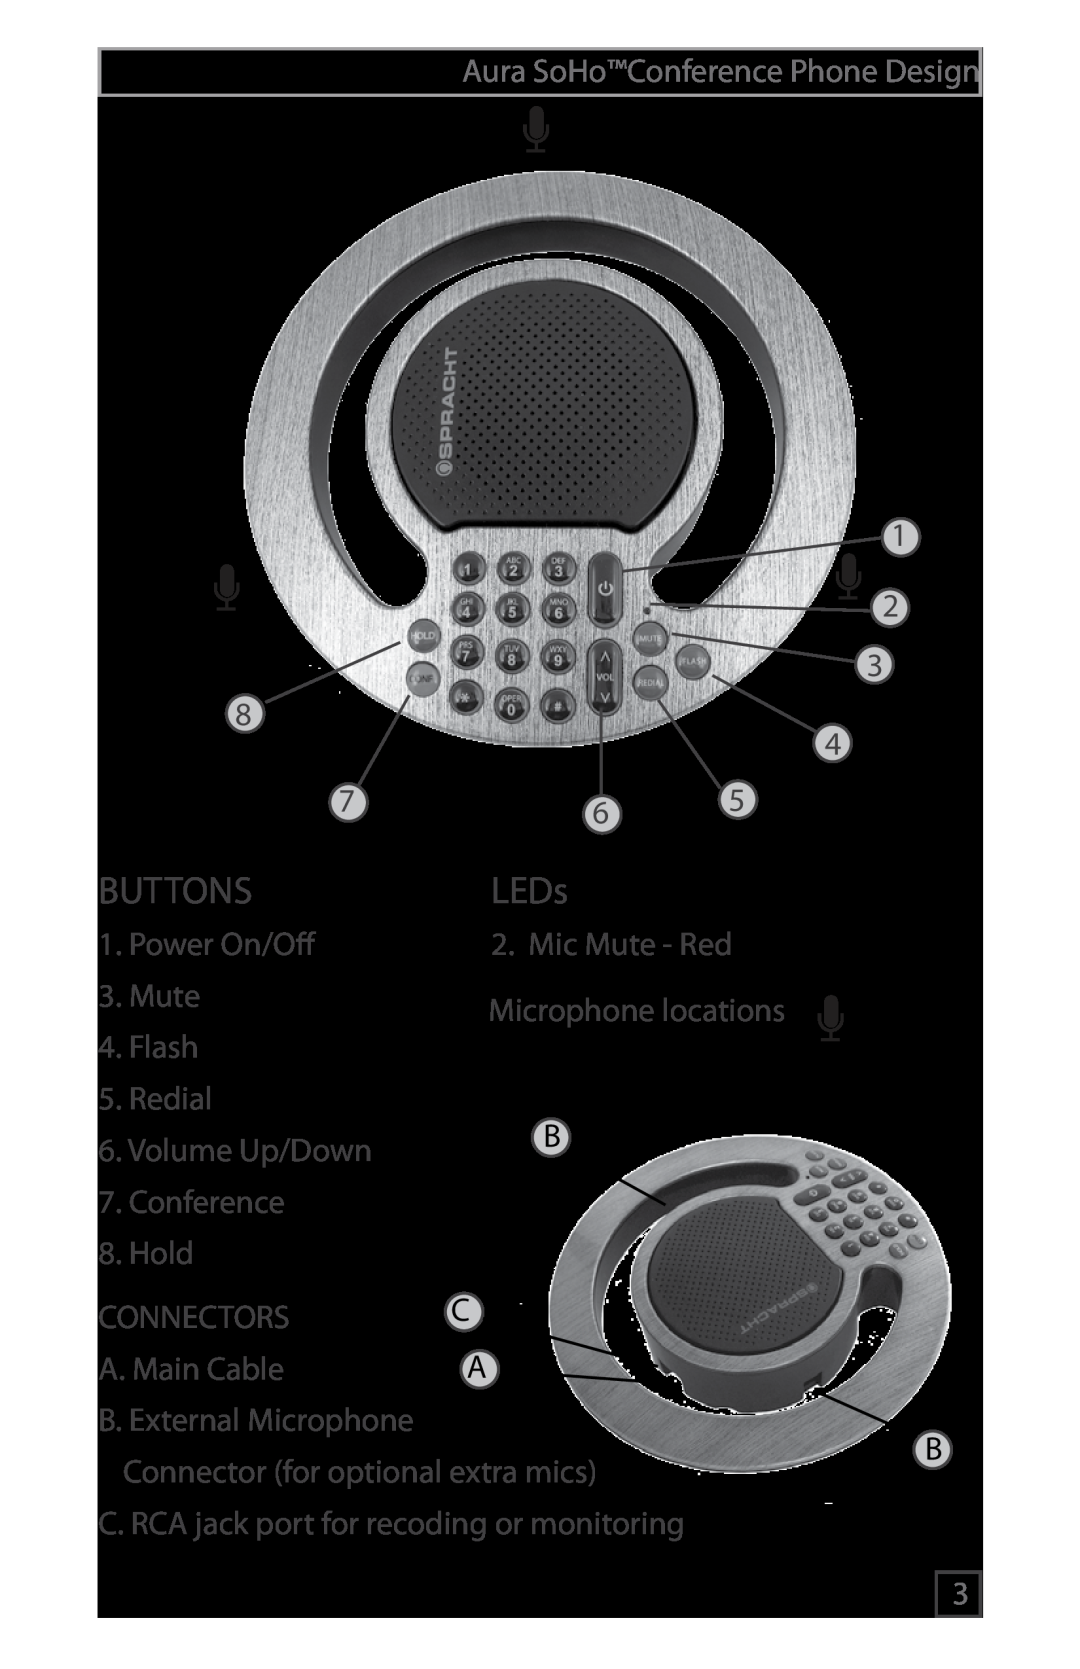 Technicolor - Thomson CP-2016-007 manual Aura SoHoConference Phone Design, Buttons, LEDs 